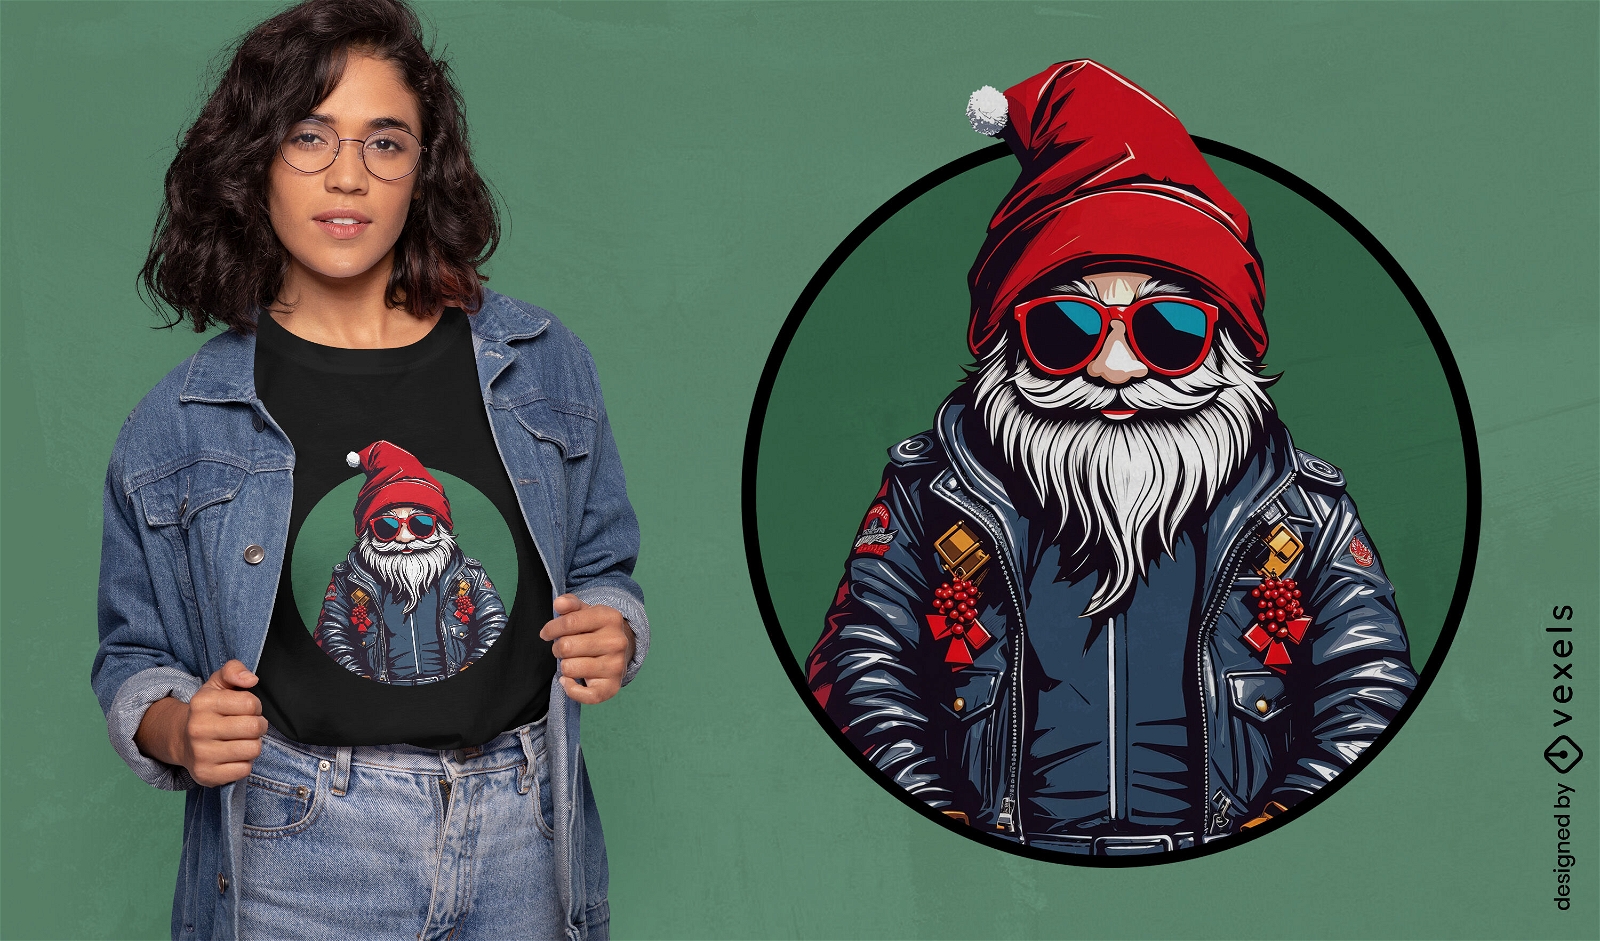 Cool Christmas Santa Claus t-shirt design